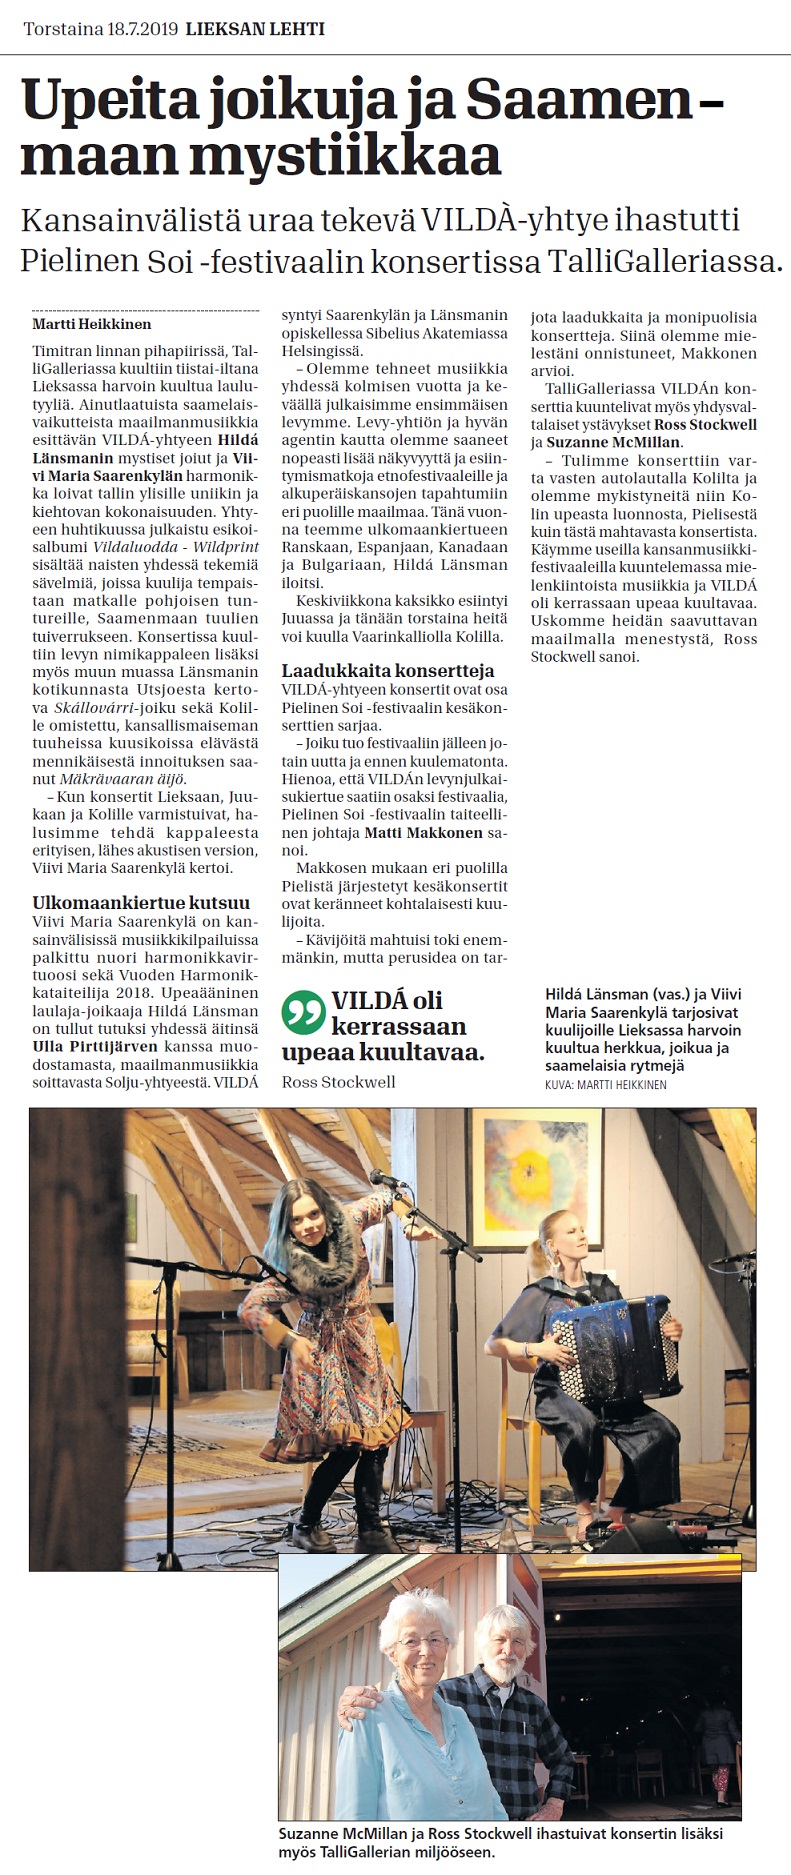 Lieksan lehti (Finland), 18.7.2019